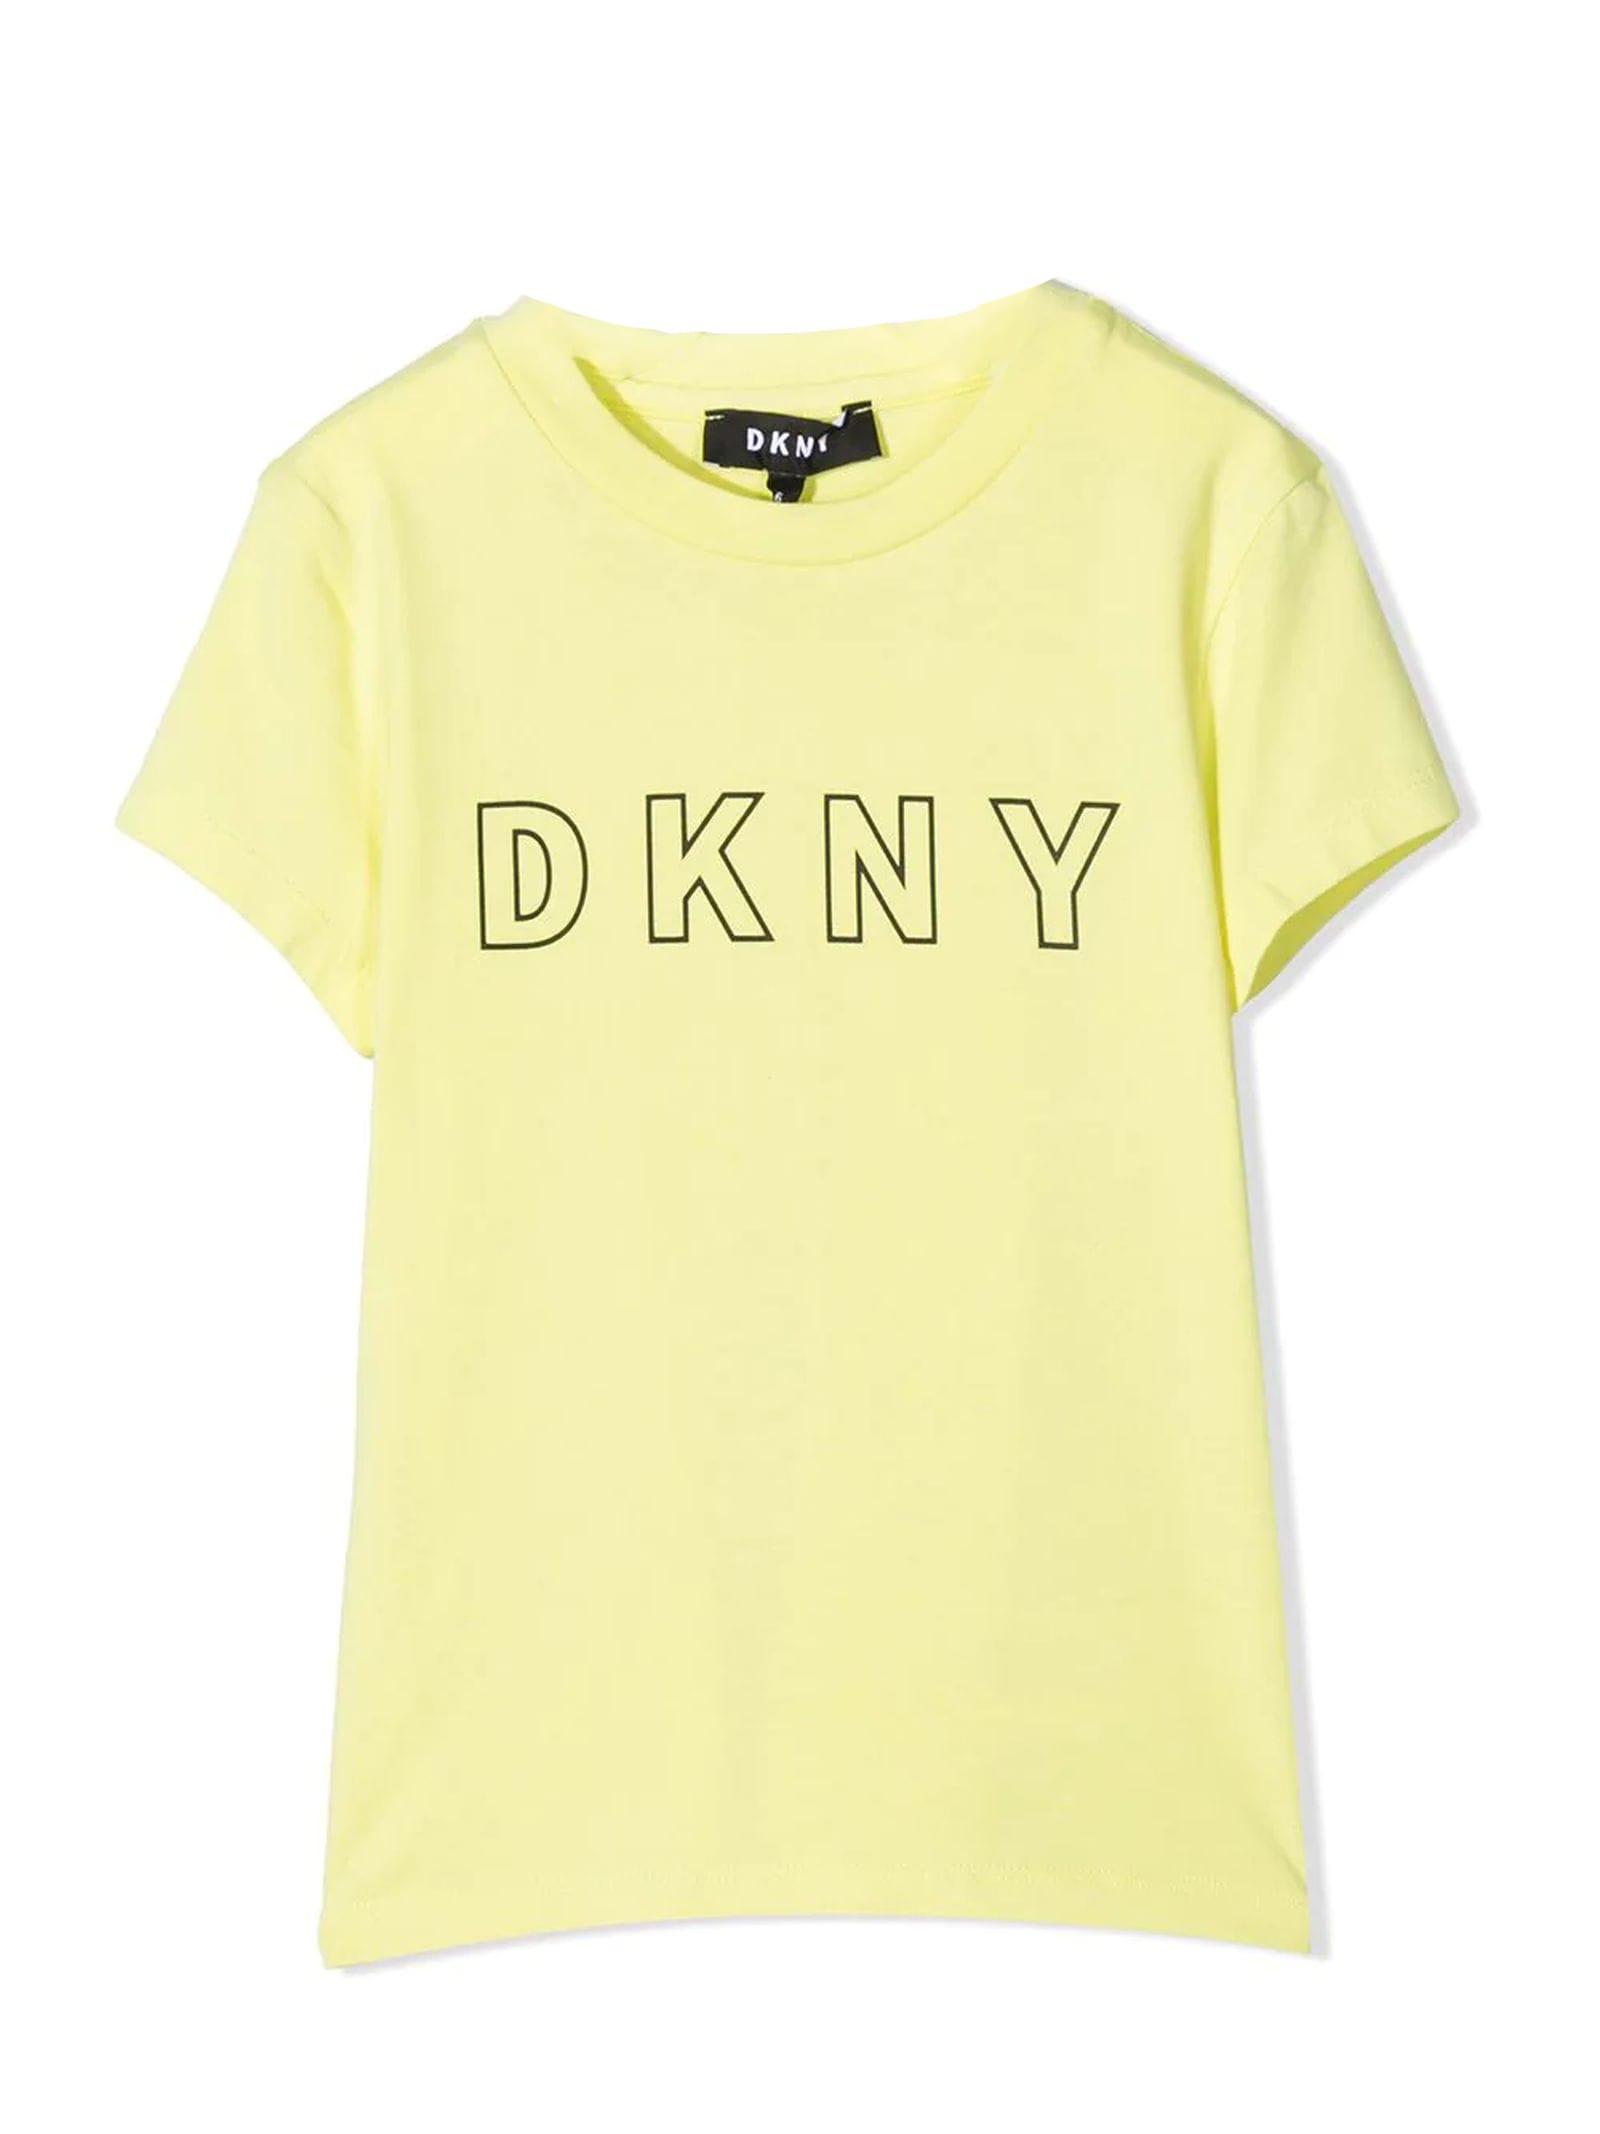 DKNY Yellow Cotton T-shirt